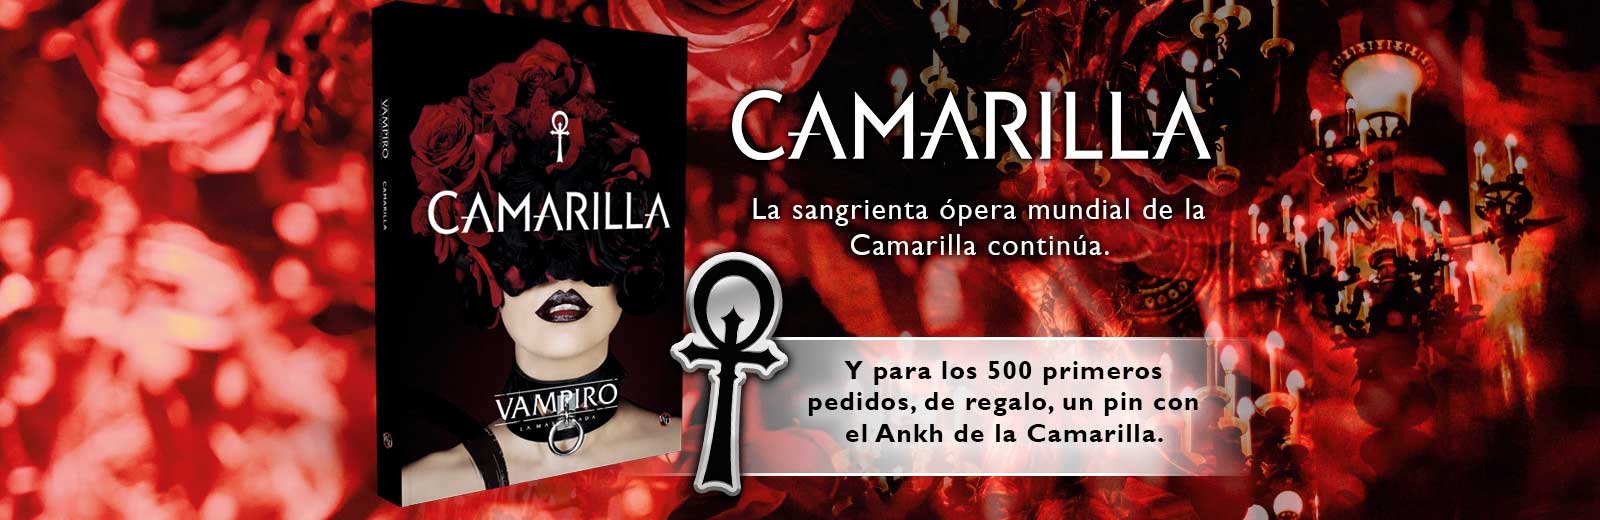 WEB_banner_Camarilla_preventa